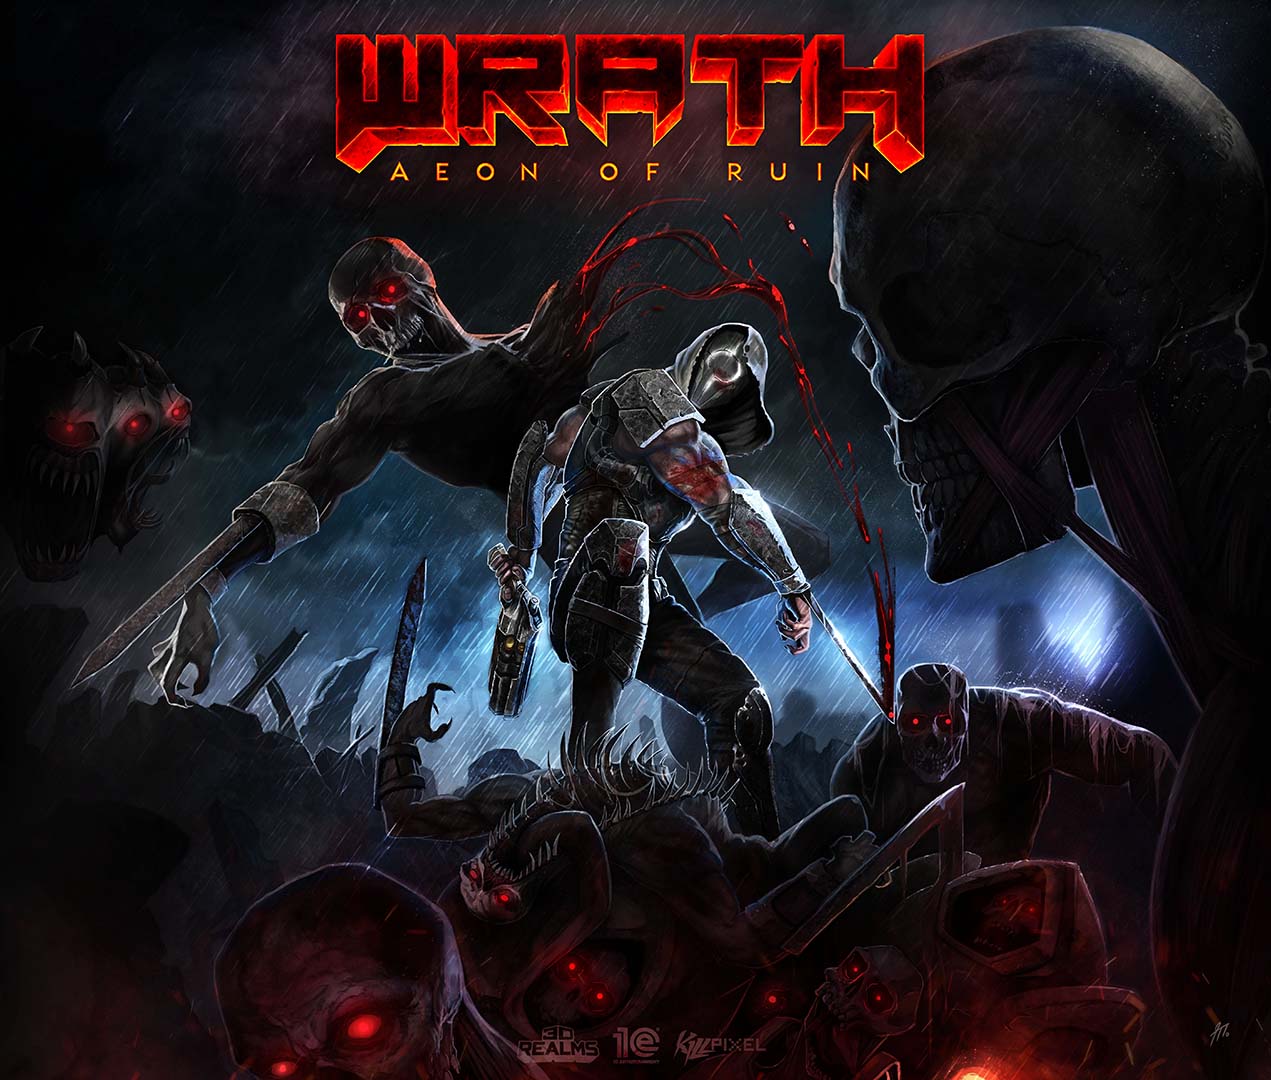 Quake Engine Horror-Fantasy FPS “Wrath: Aeon of Ruin” Announced for PC and Consoles